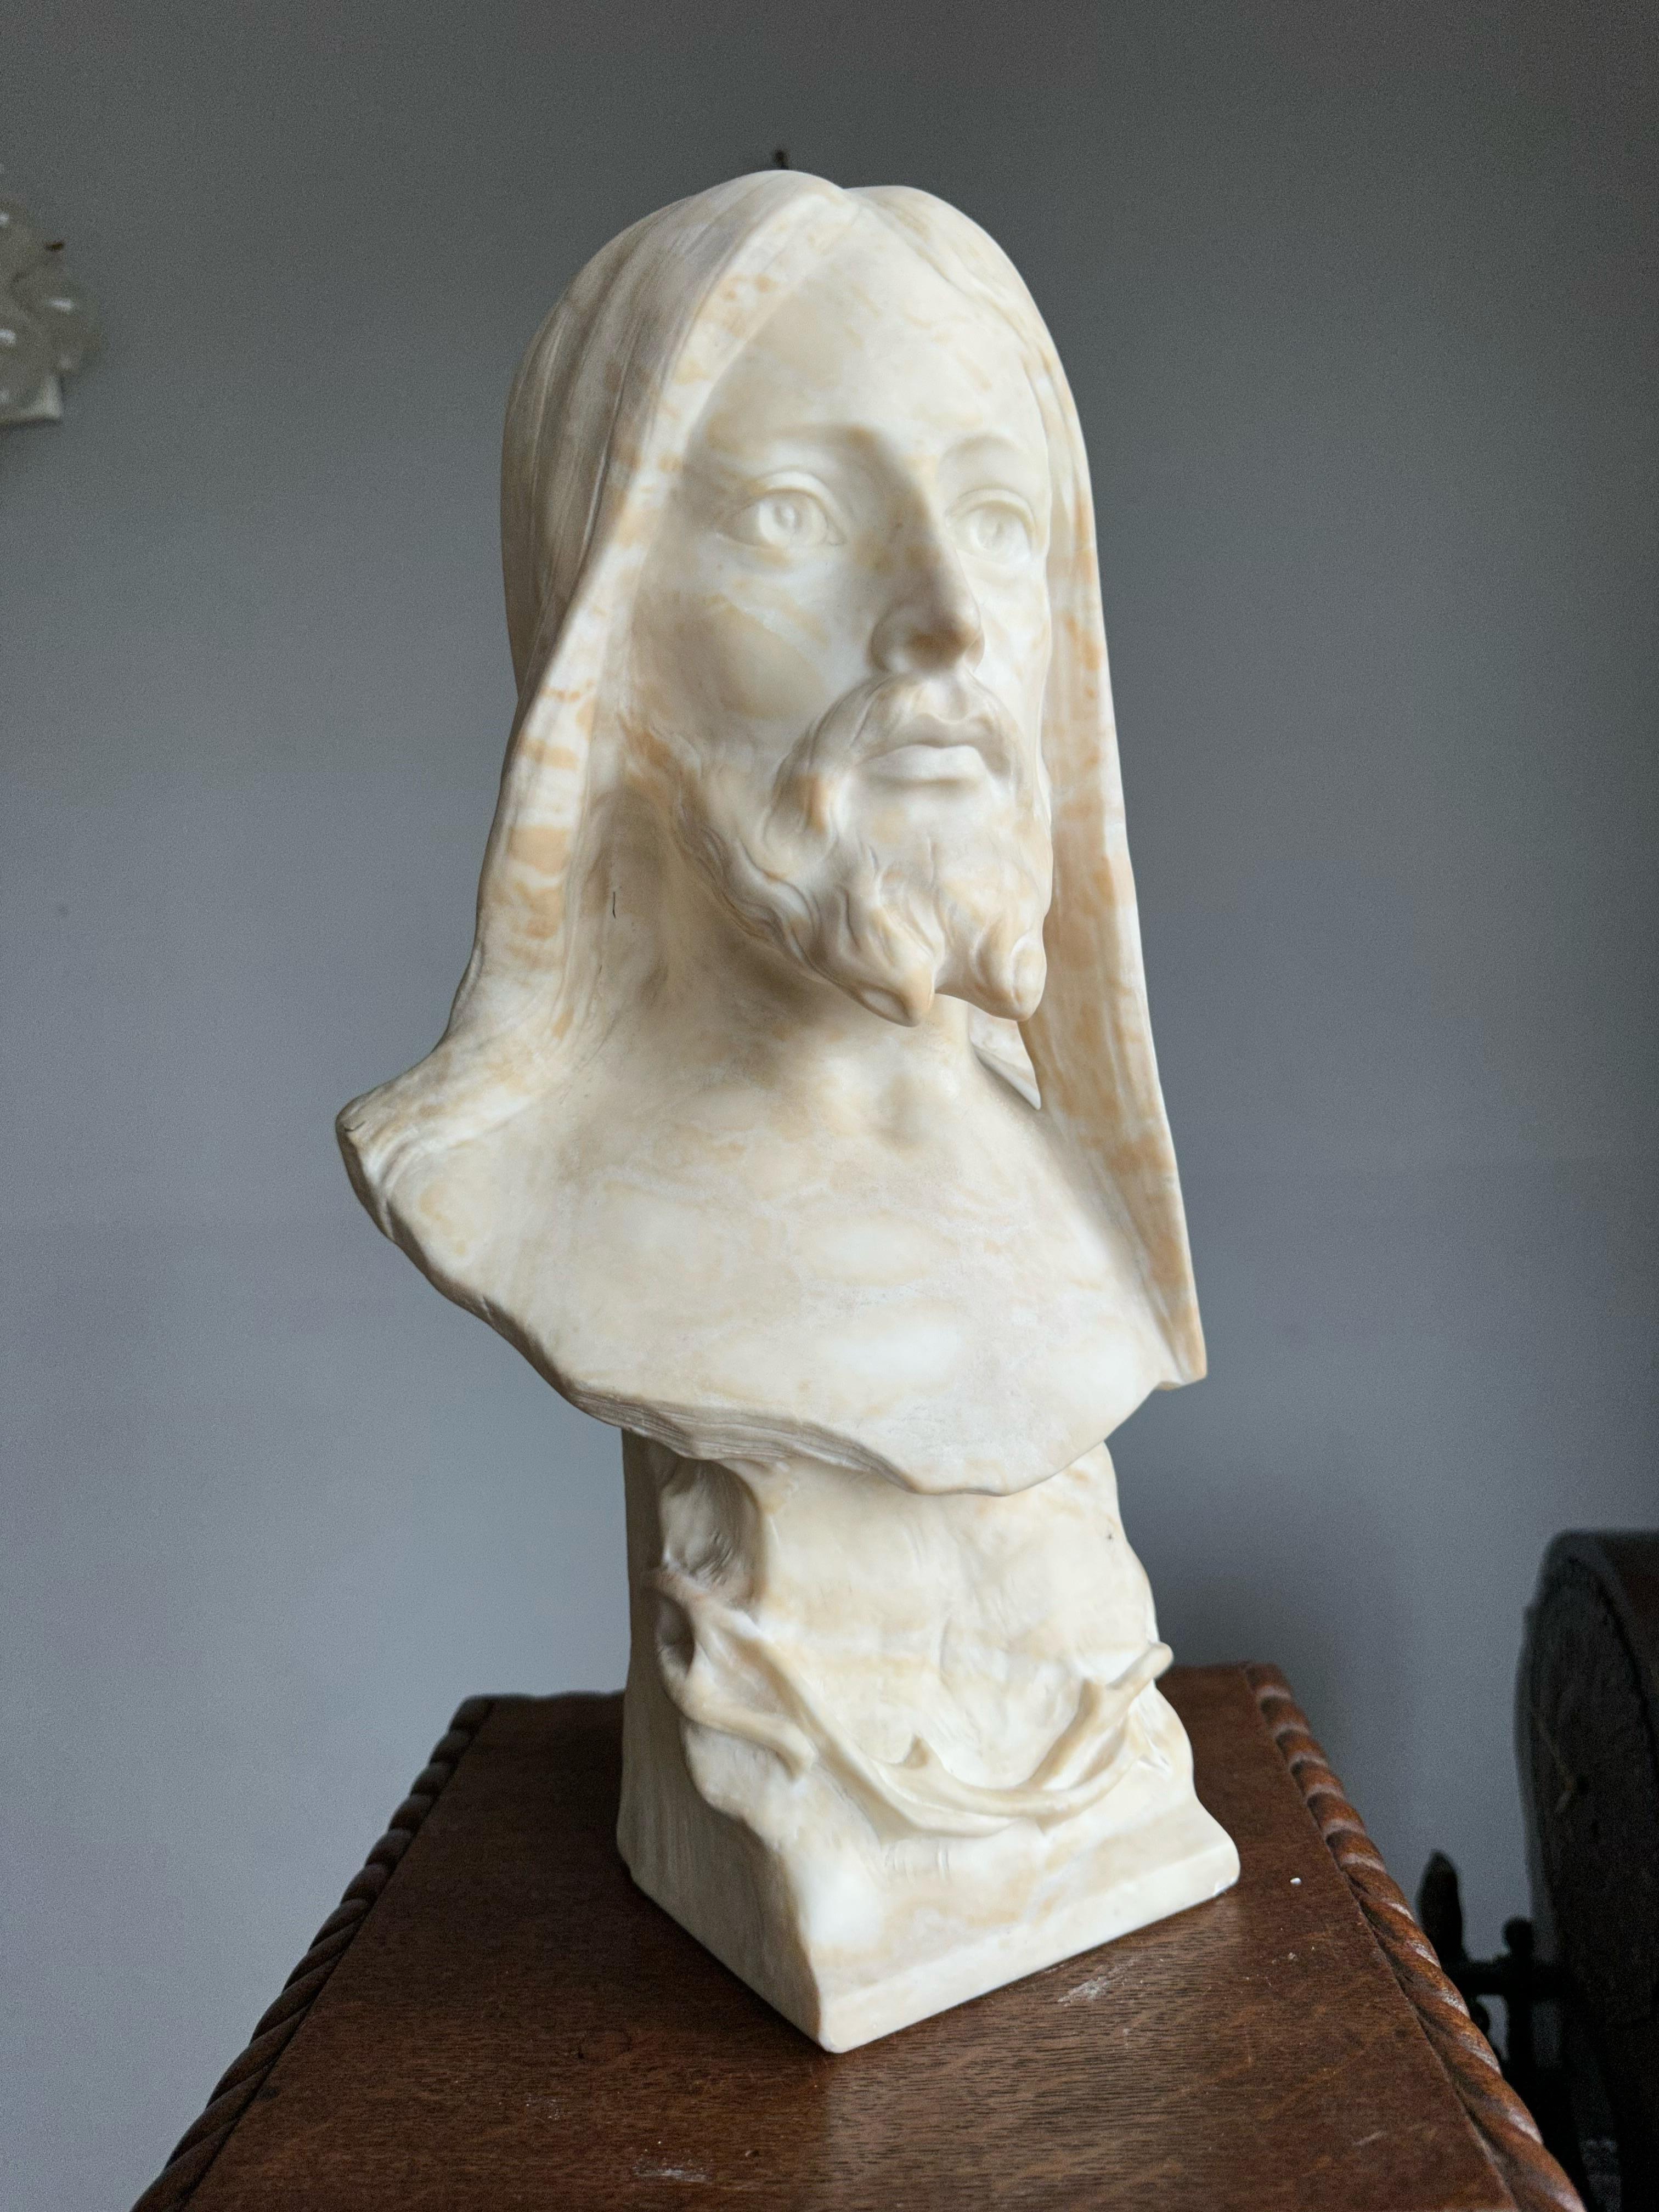 Antique, Early 1900 Large Hand Carved Alabaster Sculpture / Bust of Jesus Christ For Sale 10